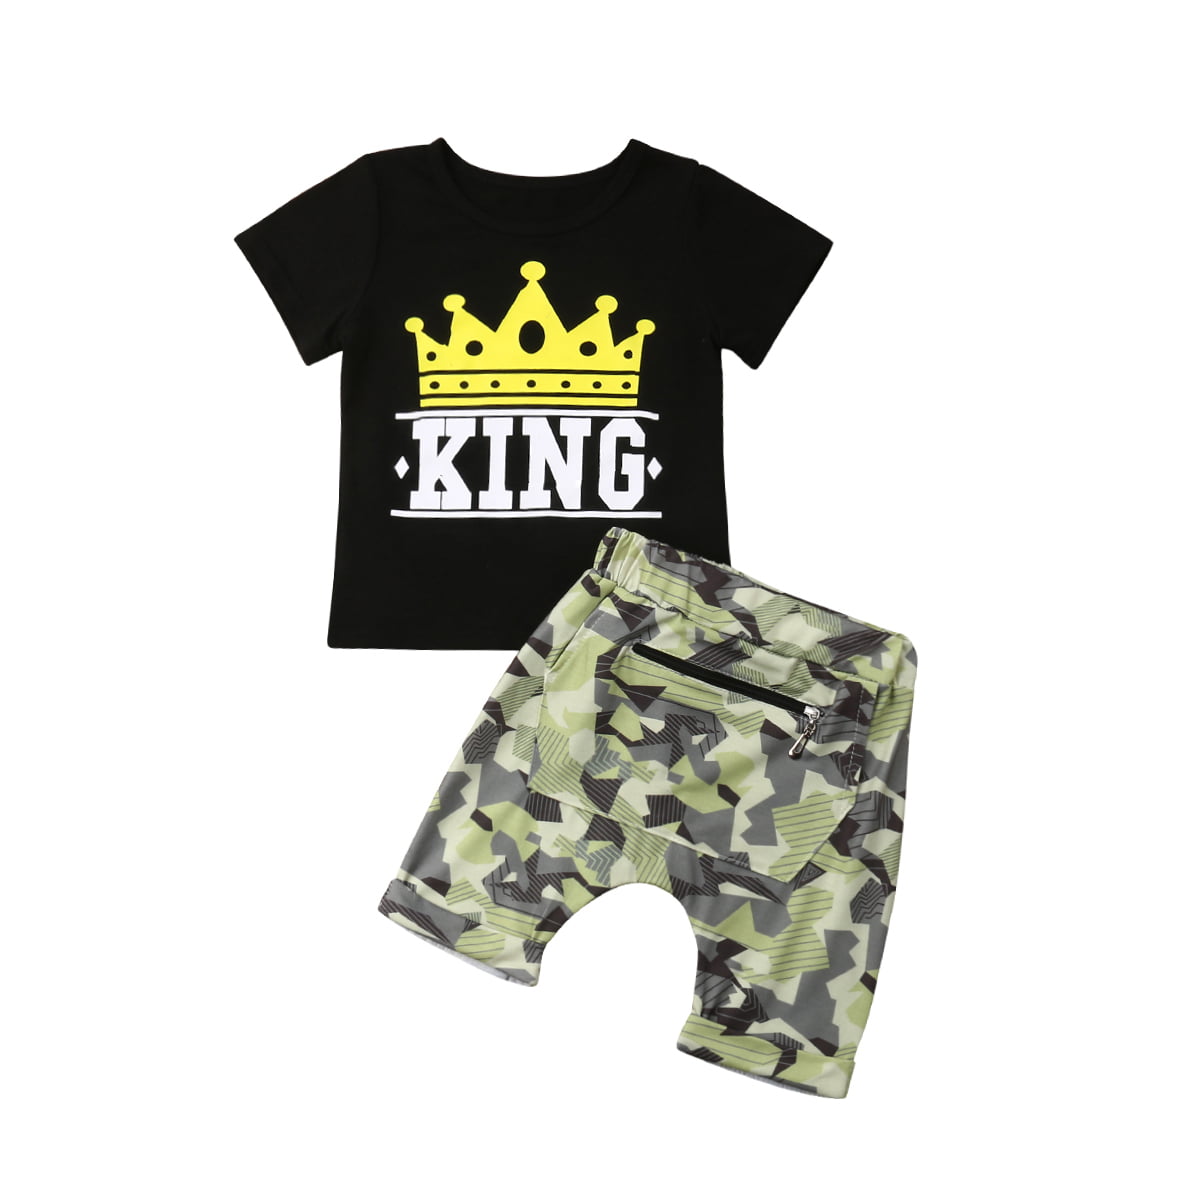 Infant Baby Boys Kids Summer Clothes T-shirt Tops Shorts Pants Outfits Set UK 